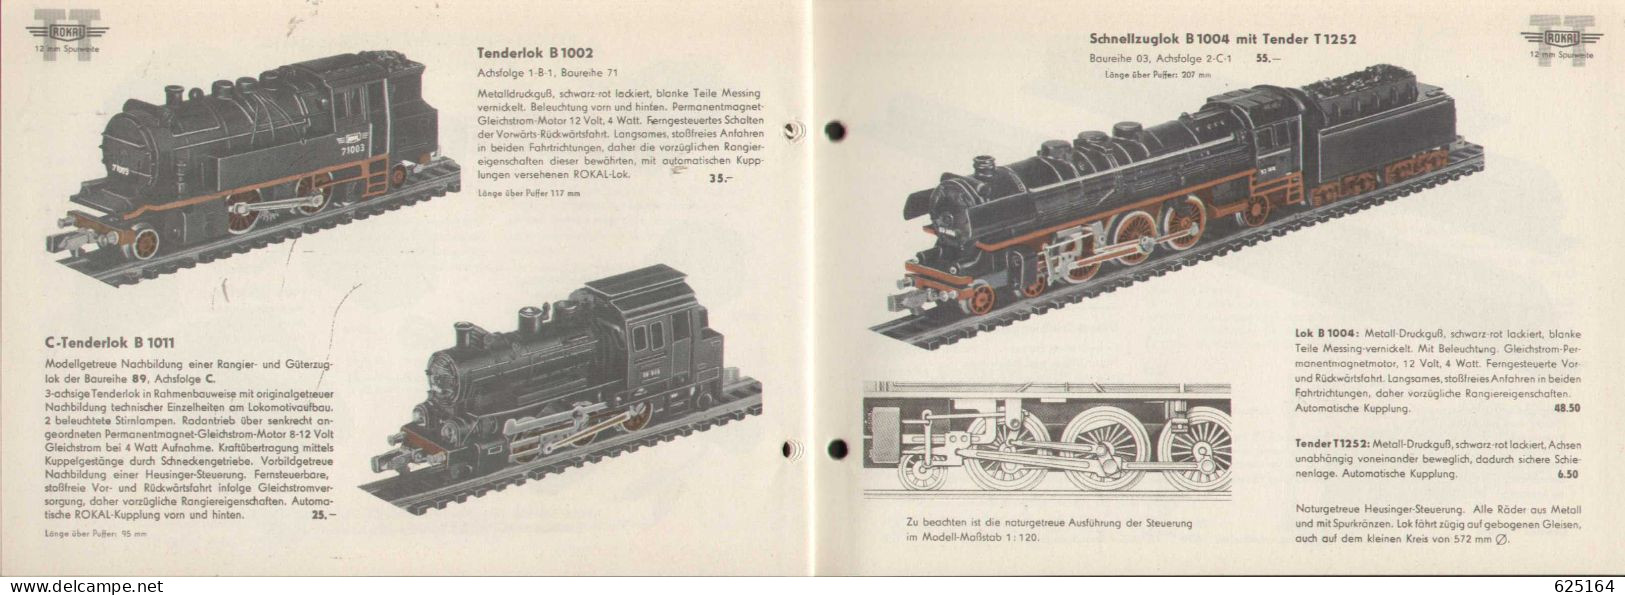 Catalogue Rokal 1958 Modellbahn-Katalog Spur TT 1:120 12 Mm - Tedesco